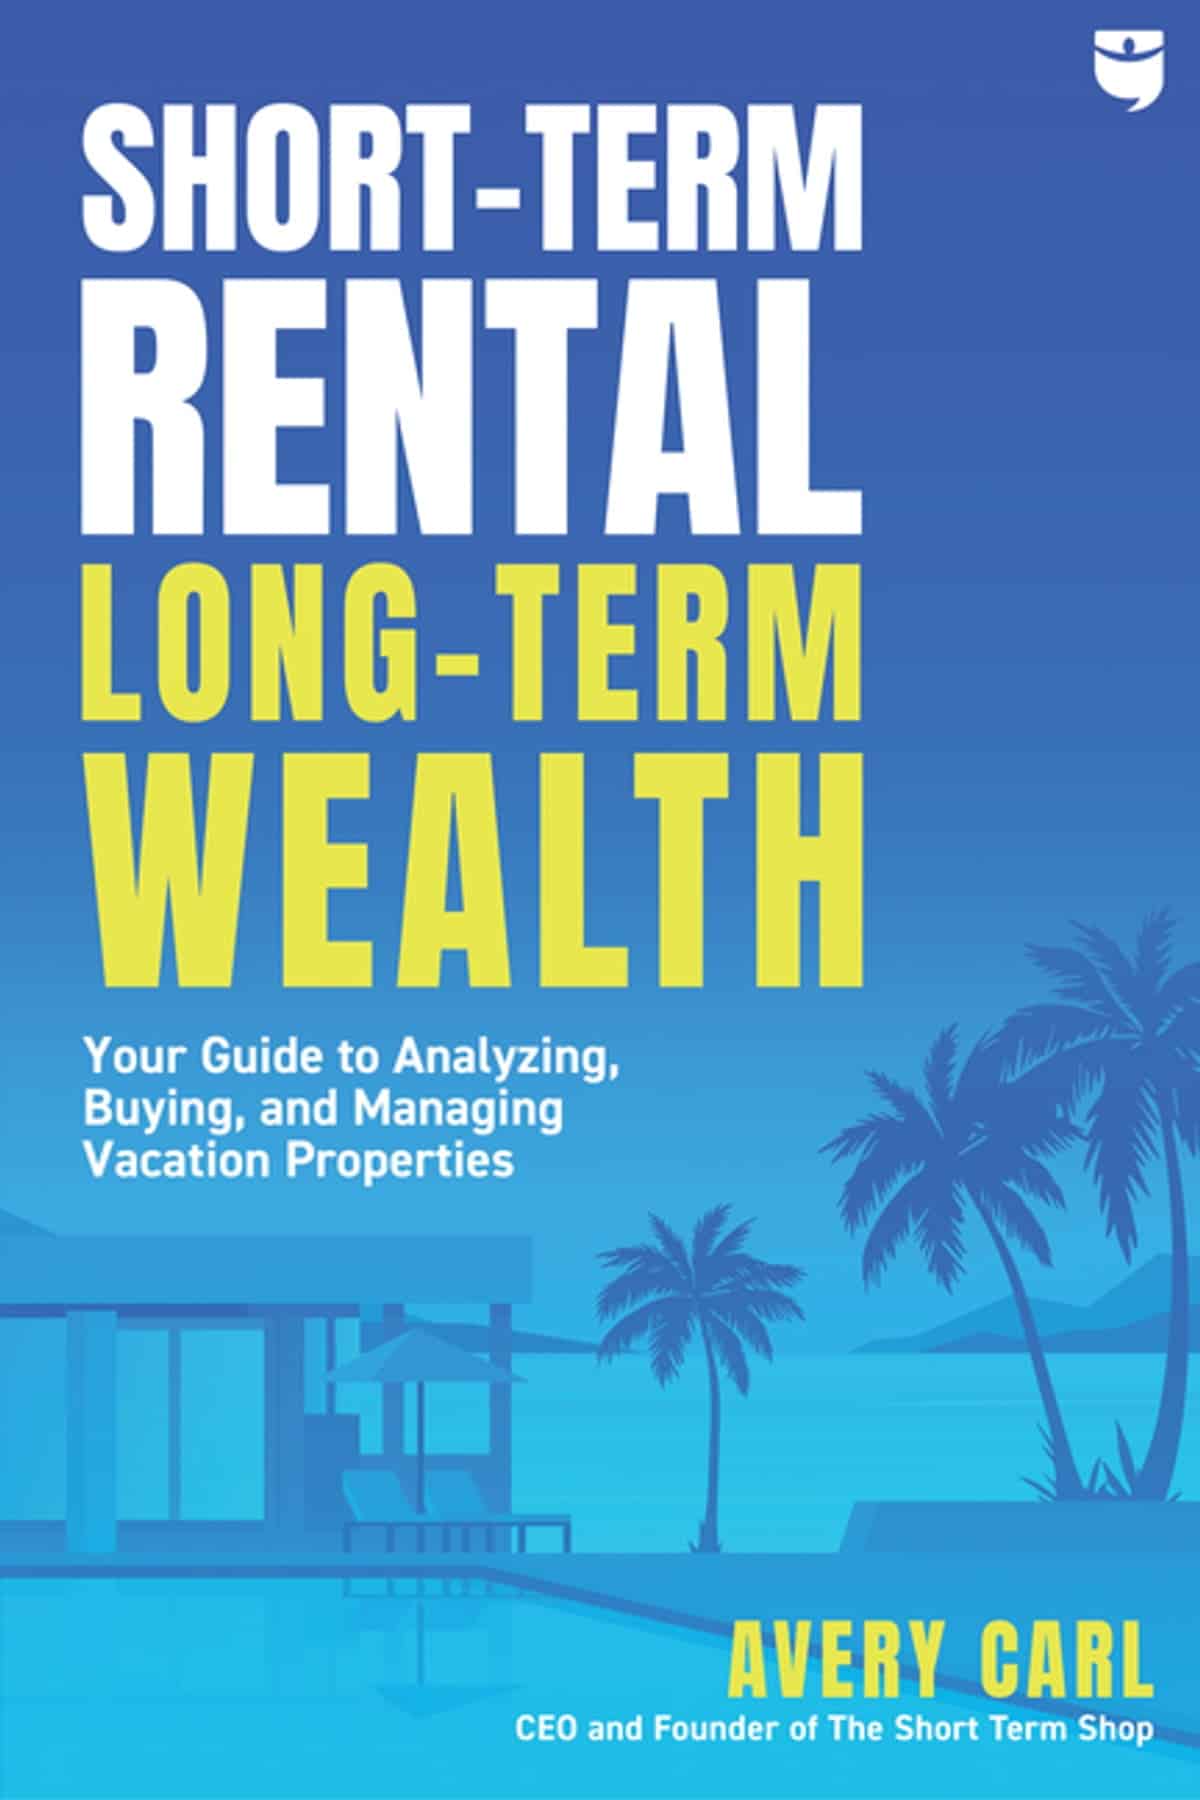 Short-Term Rental Long-Term Wealth by Avery Carl